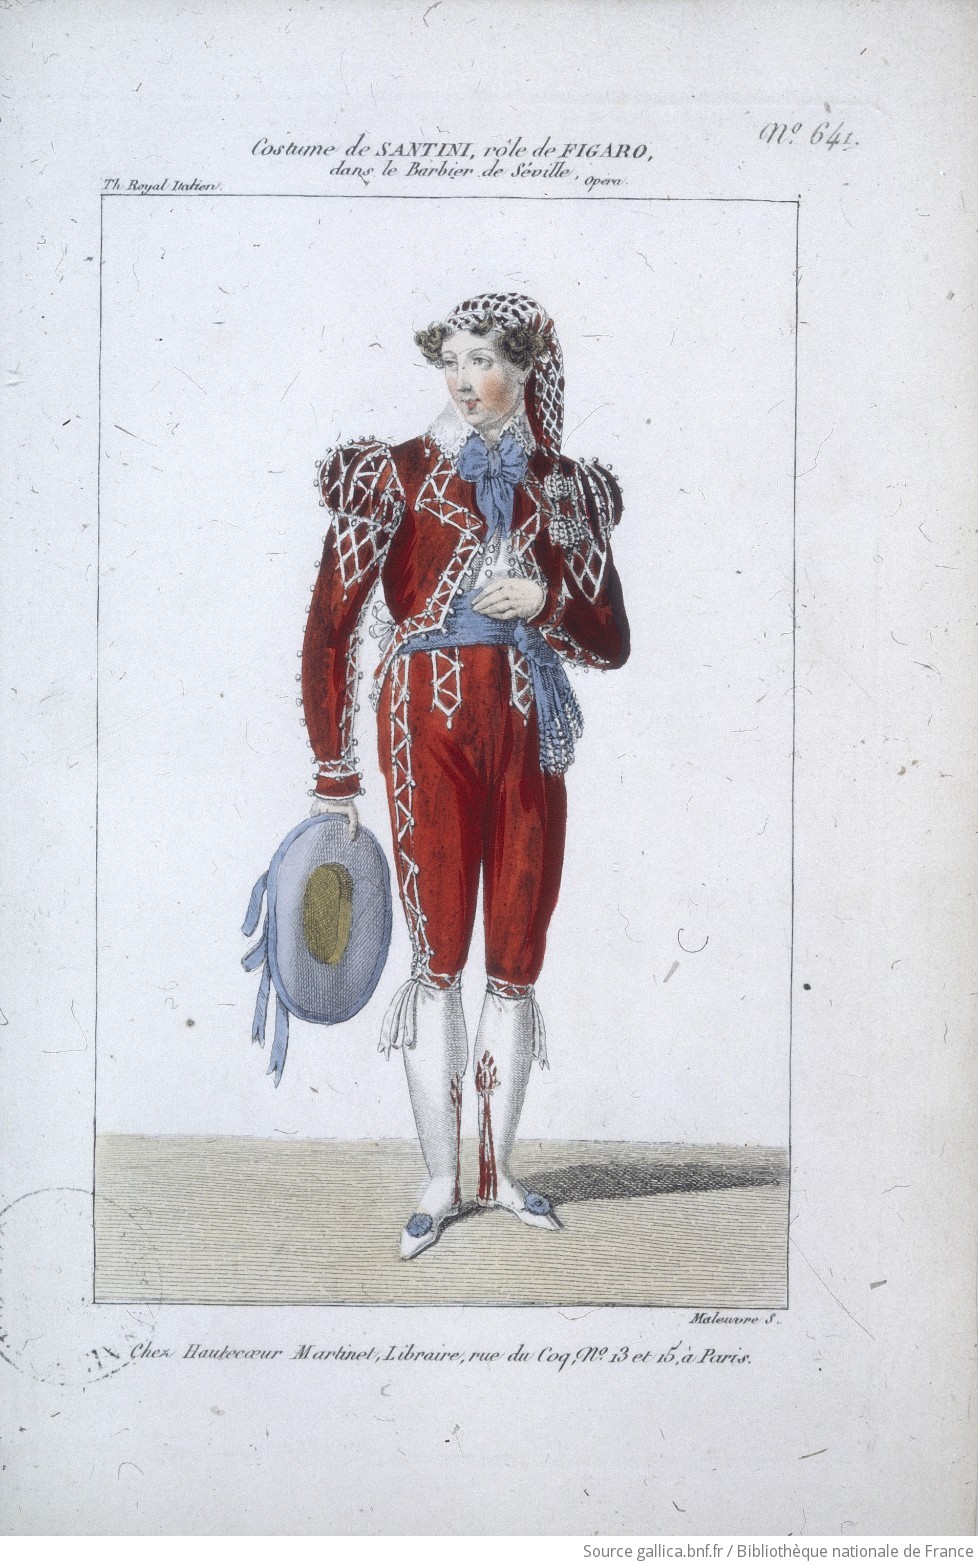 [Le barbier de Sville, comdie de Cesare Sterbini et Gioachino Rossini : costume de Santini (Figaro)] - 1